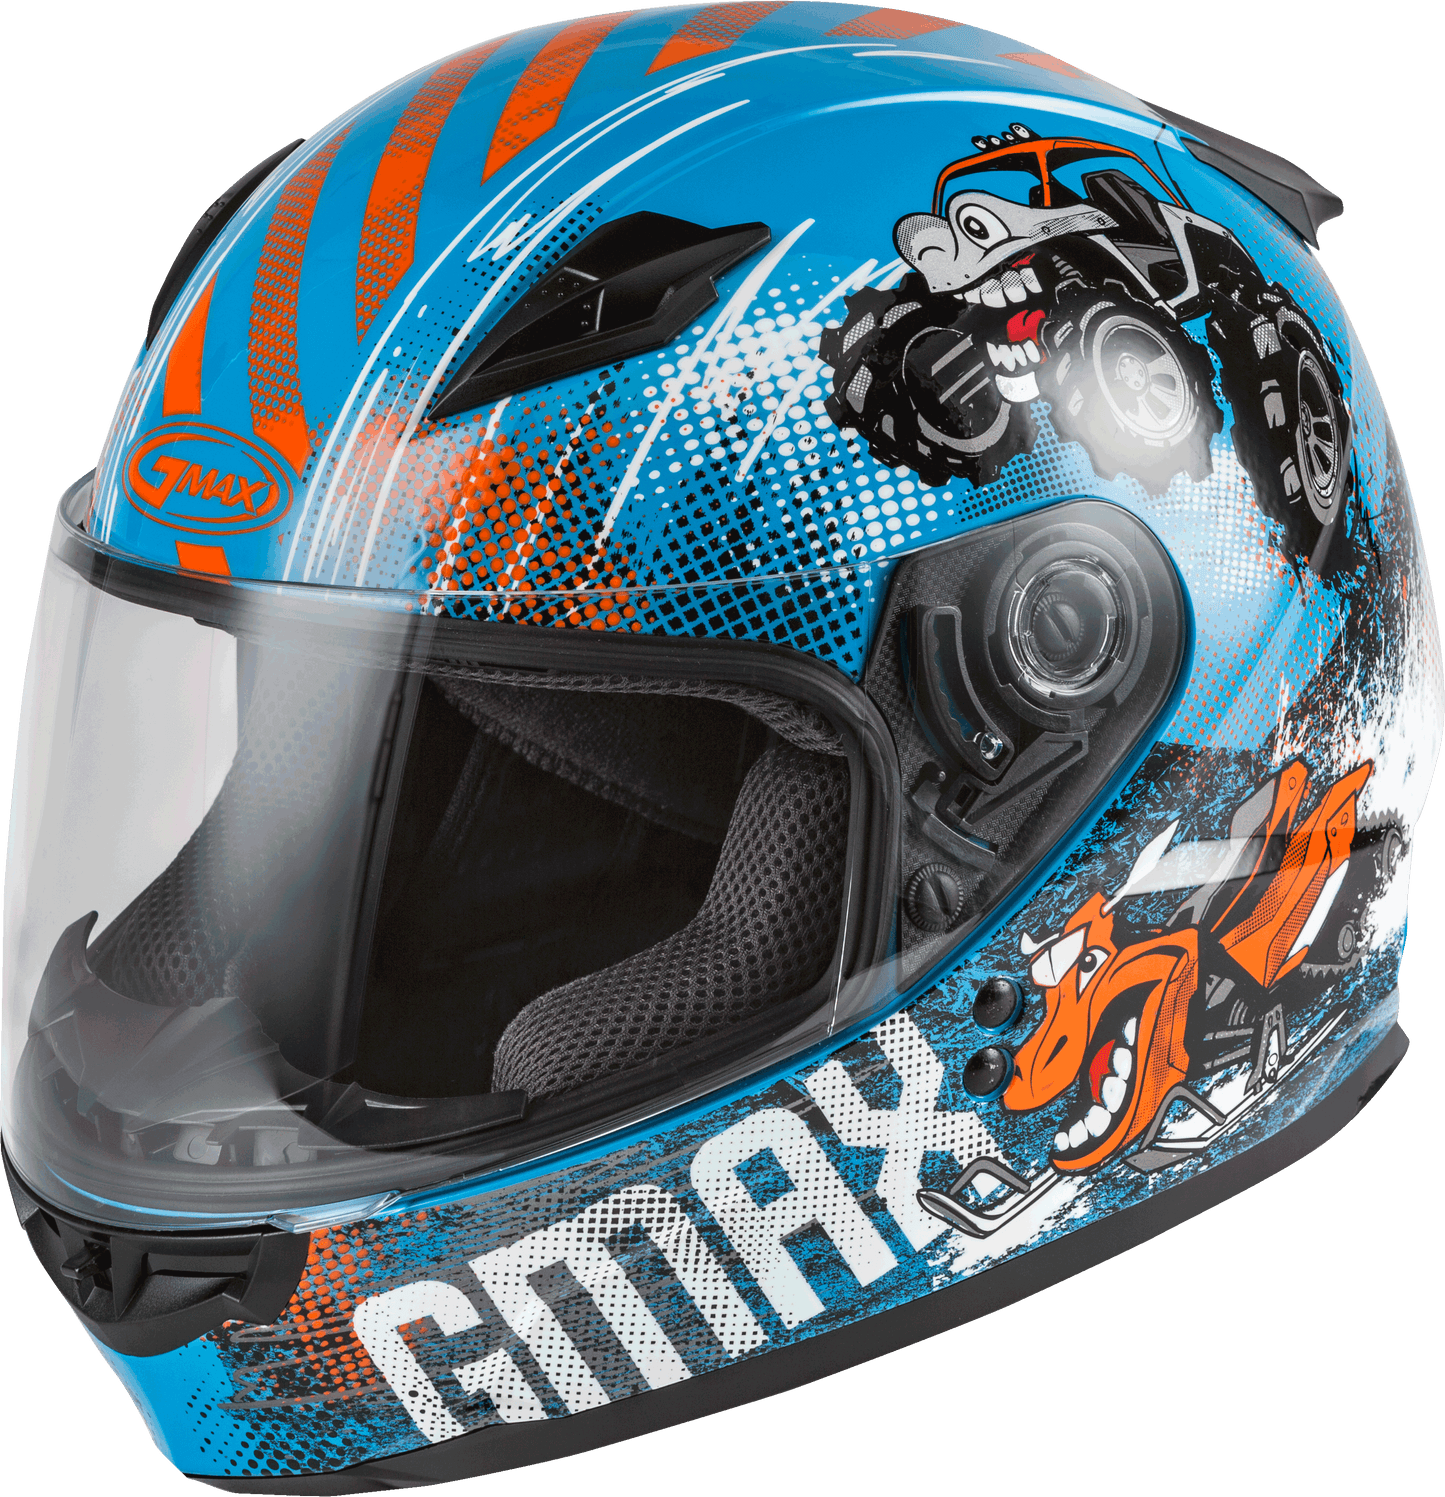 Gmax 72-4995 Youth GM-49Y 'Beasts' Full-Face Helmet Orange/Blue/Grey